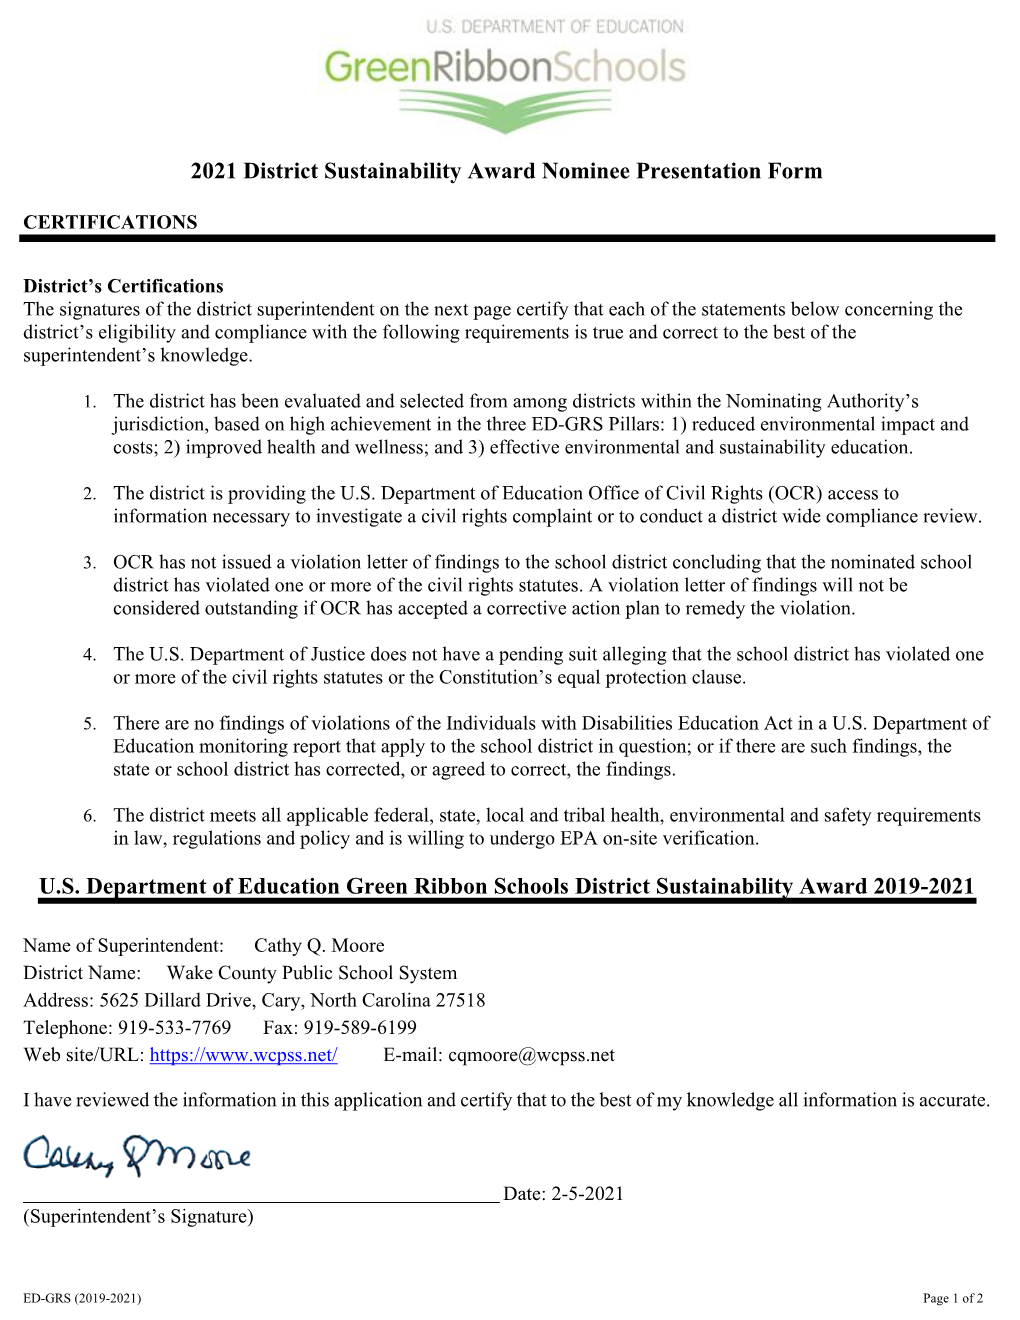 2021 District Sustainability Award Nominee Presentation Form U.S